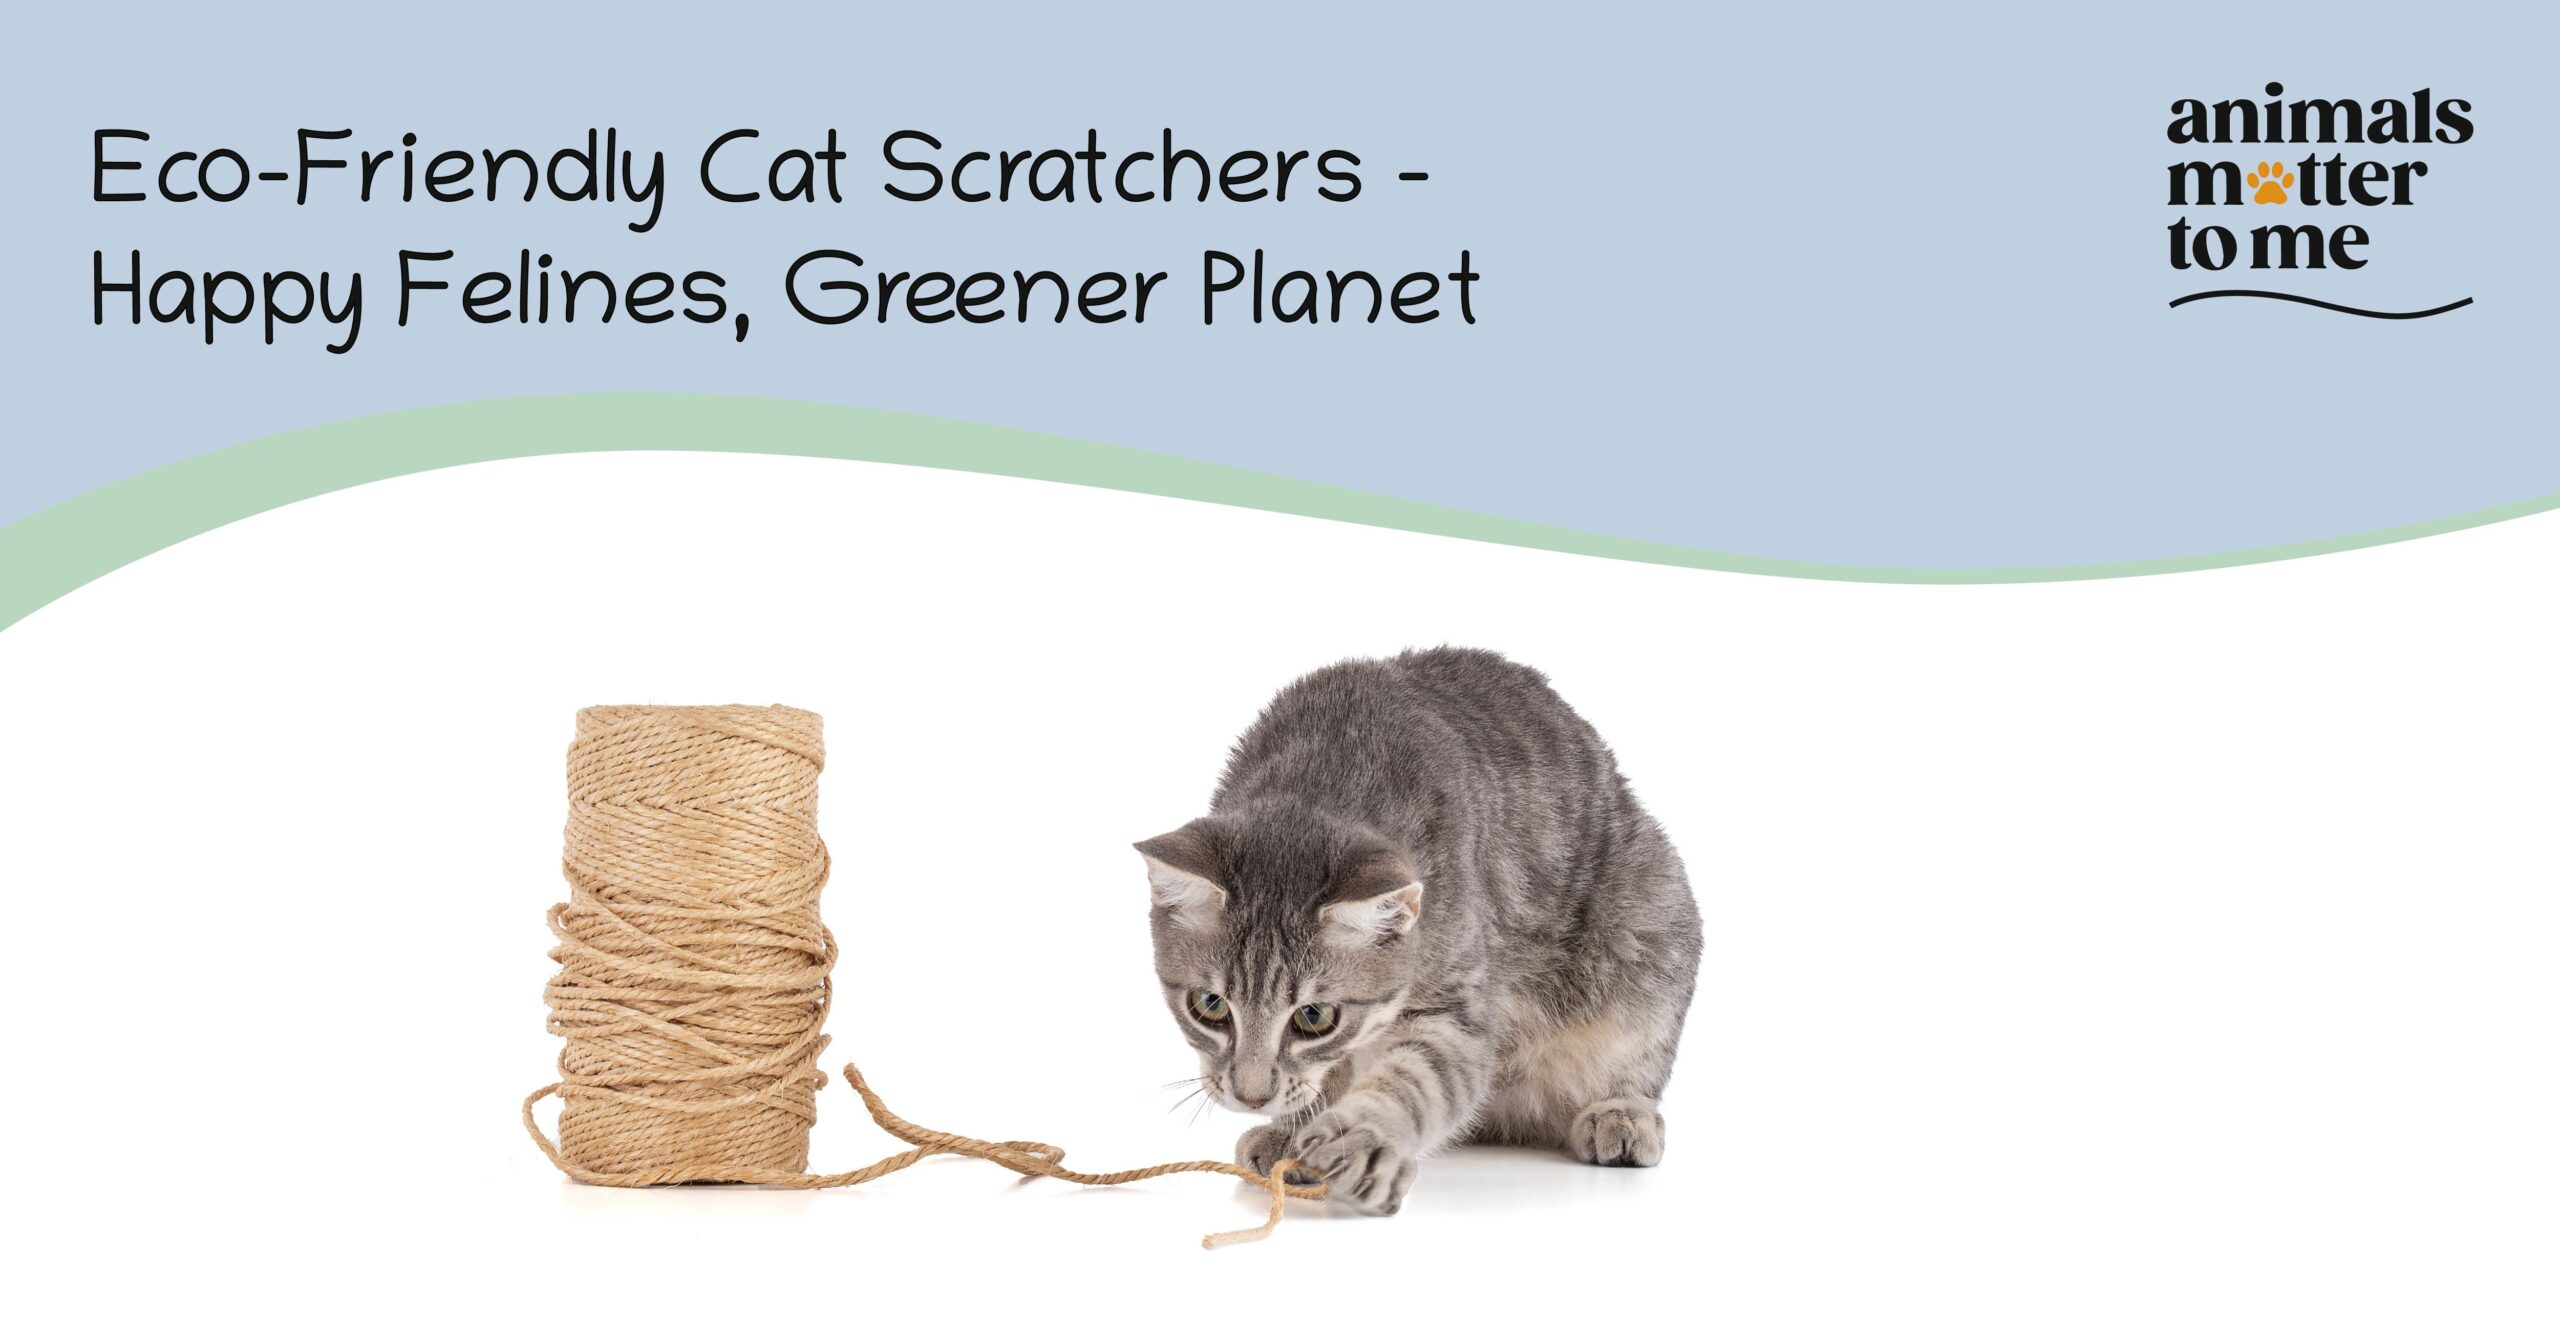 Eco-friendly cat scratchers - Blog Cover